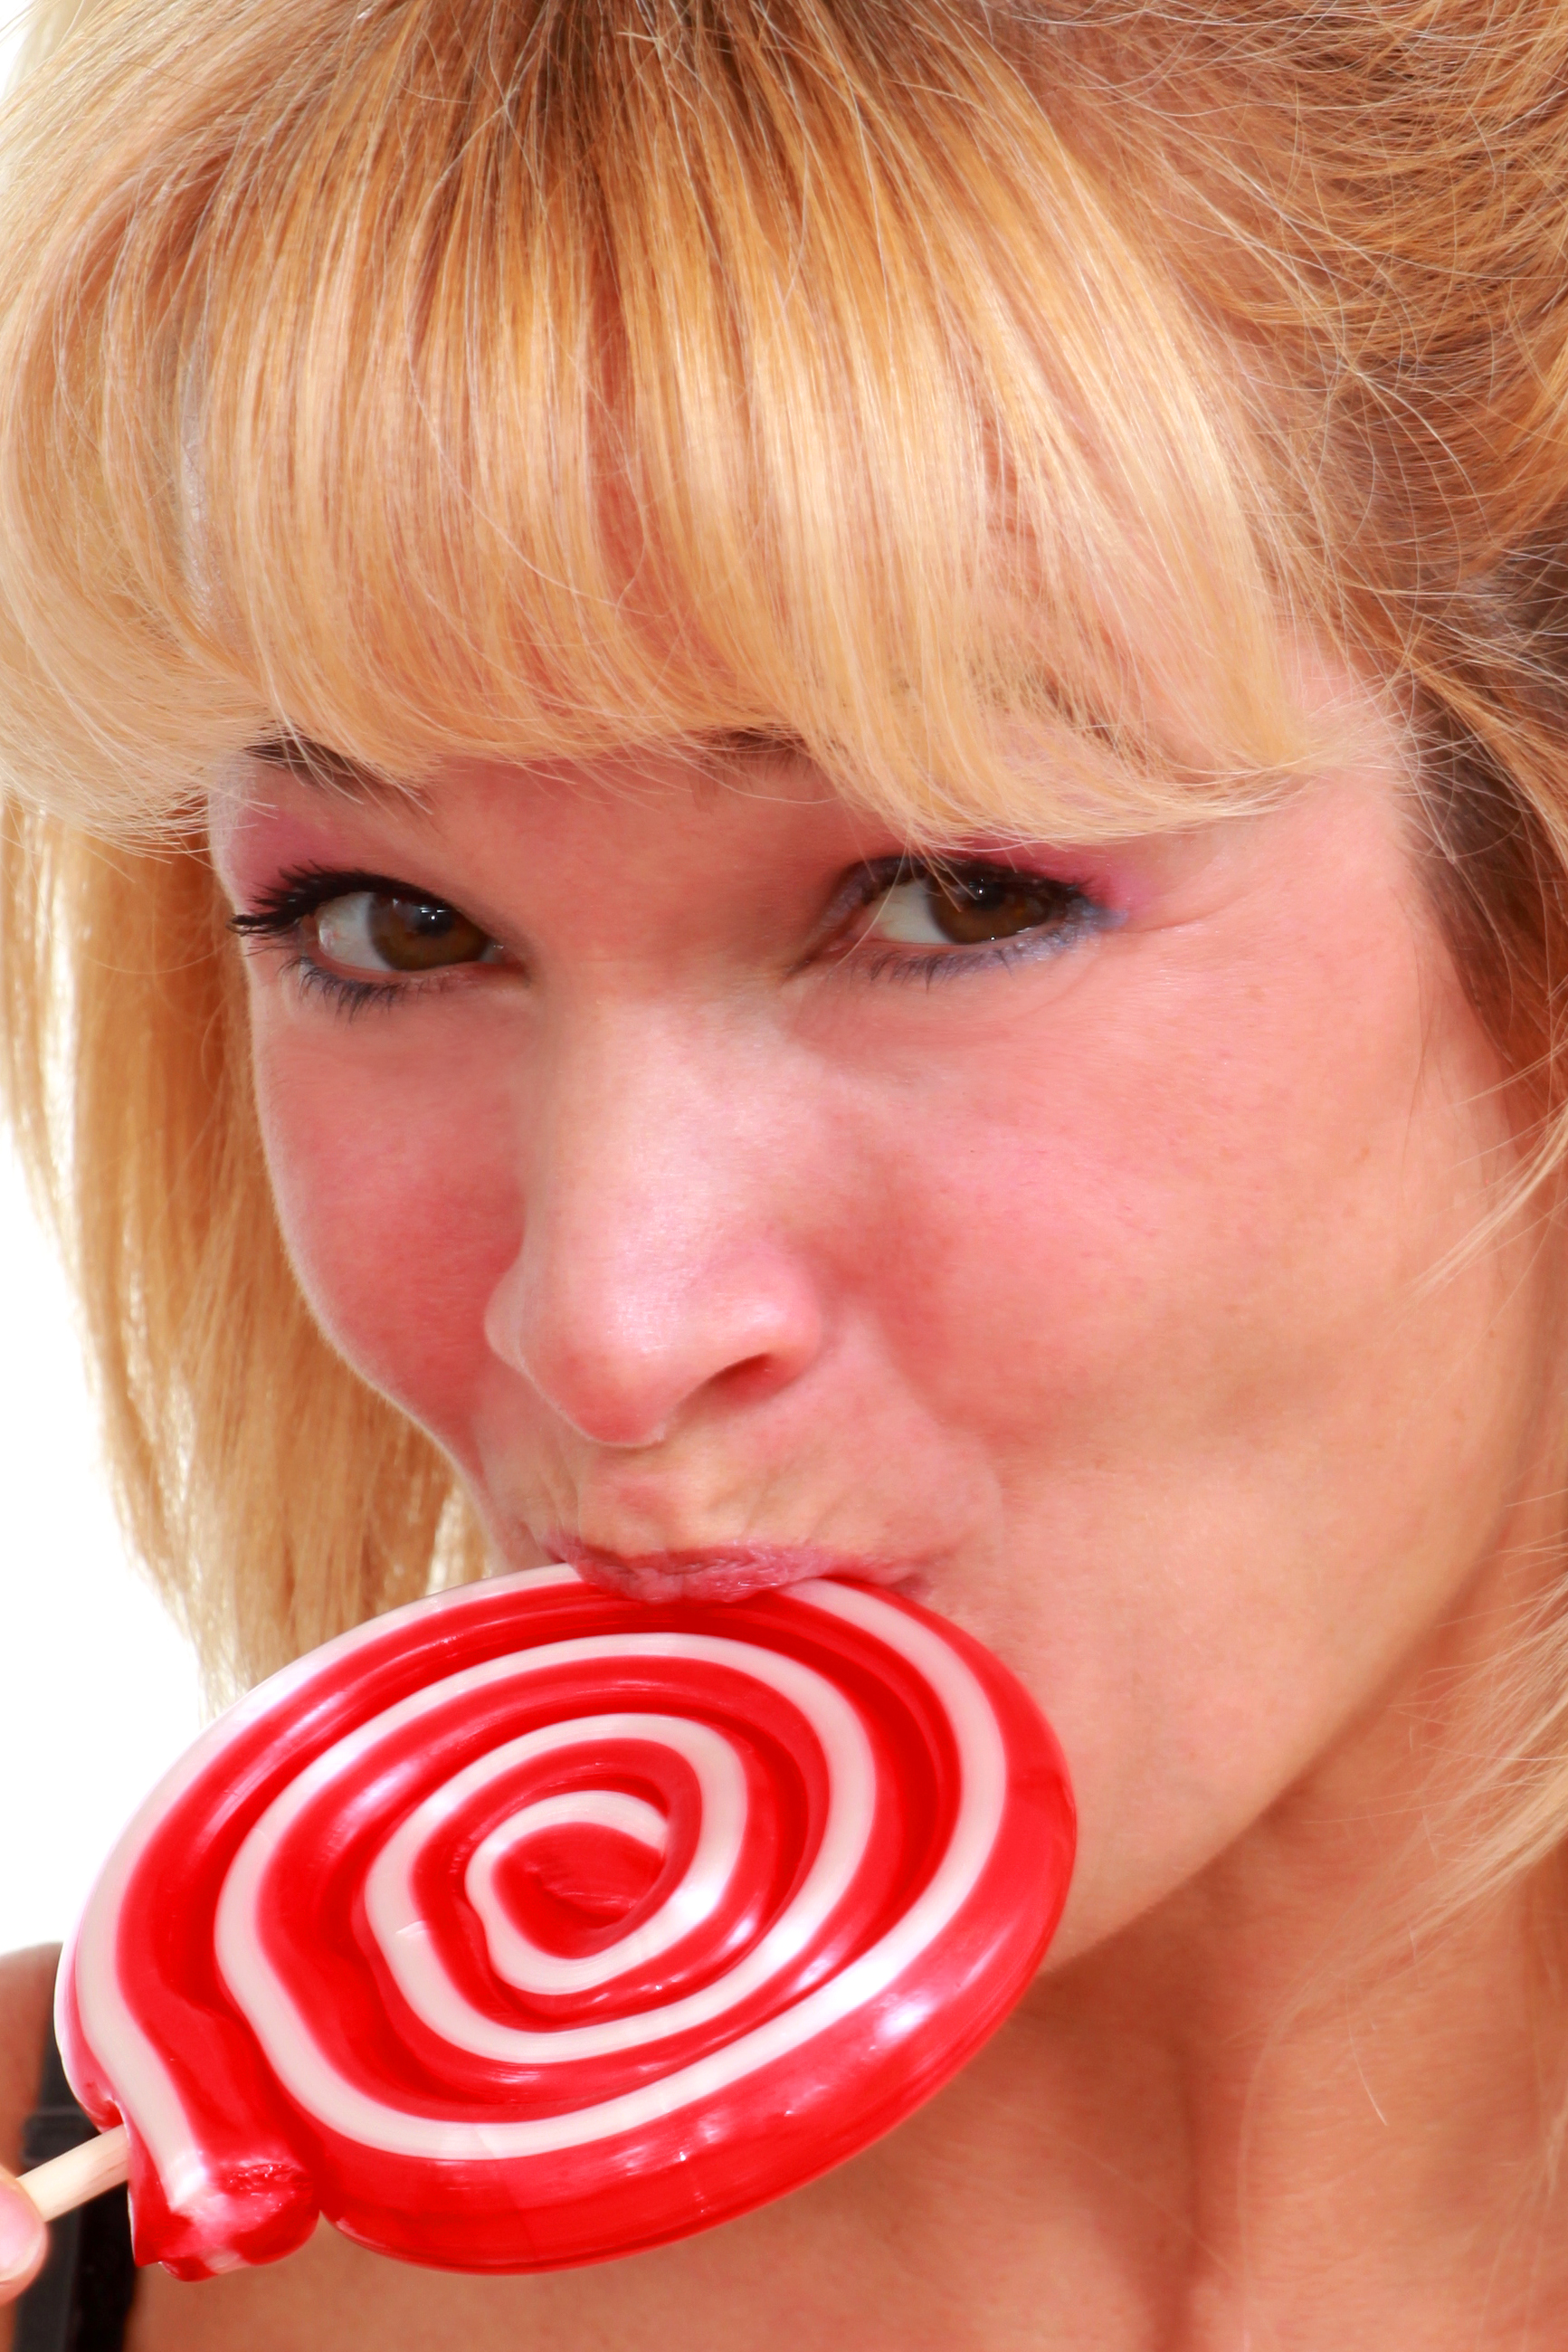 Woman enjoying a lollipop, Adult, Licking, White, Sweet, HQ Photo